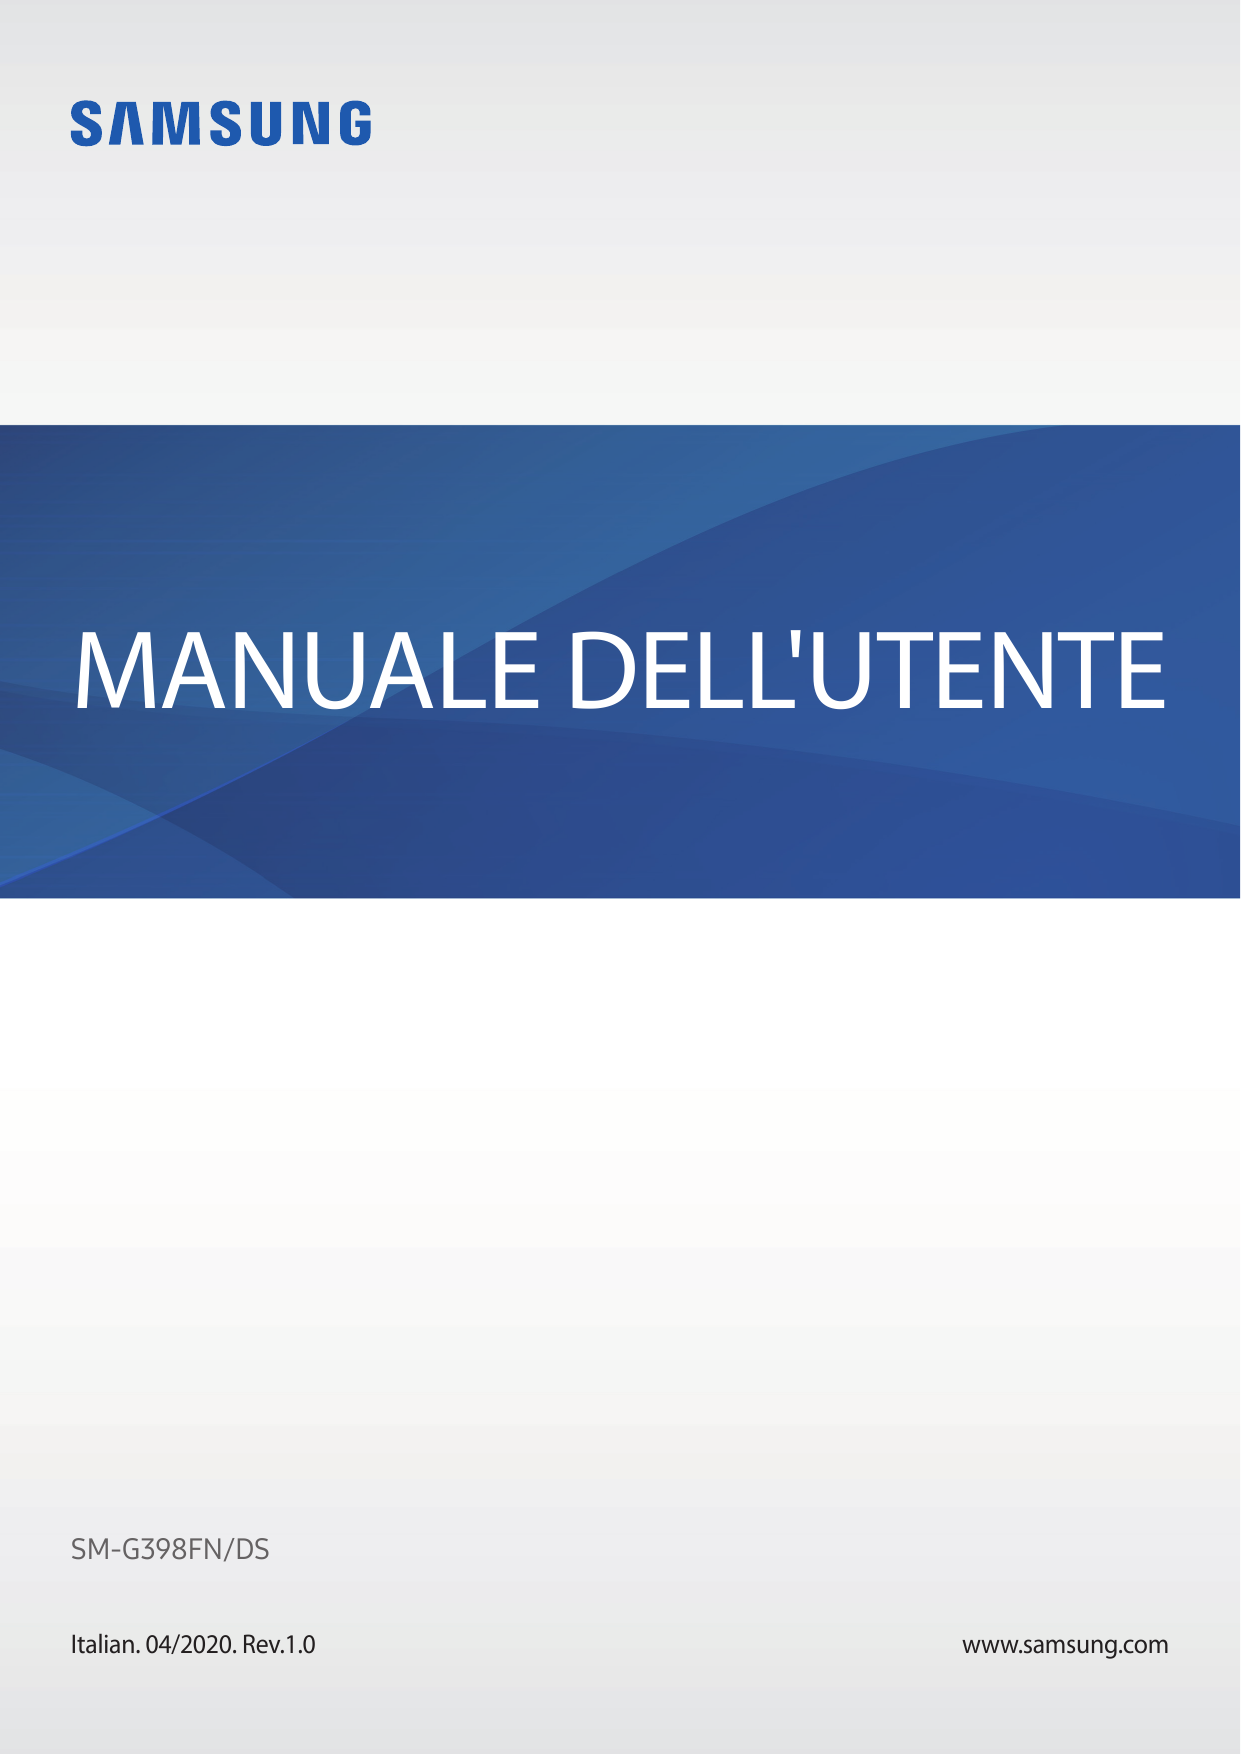 MANUALE DELL'UTENTESM-G398FN/DSItalian. 04/2020. Rev.1.0www.samsung.com